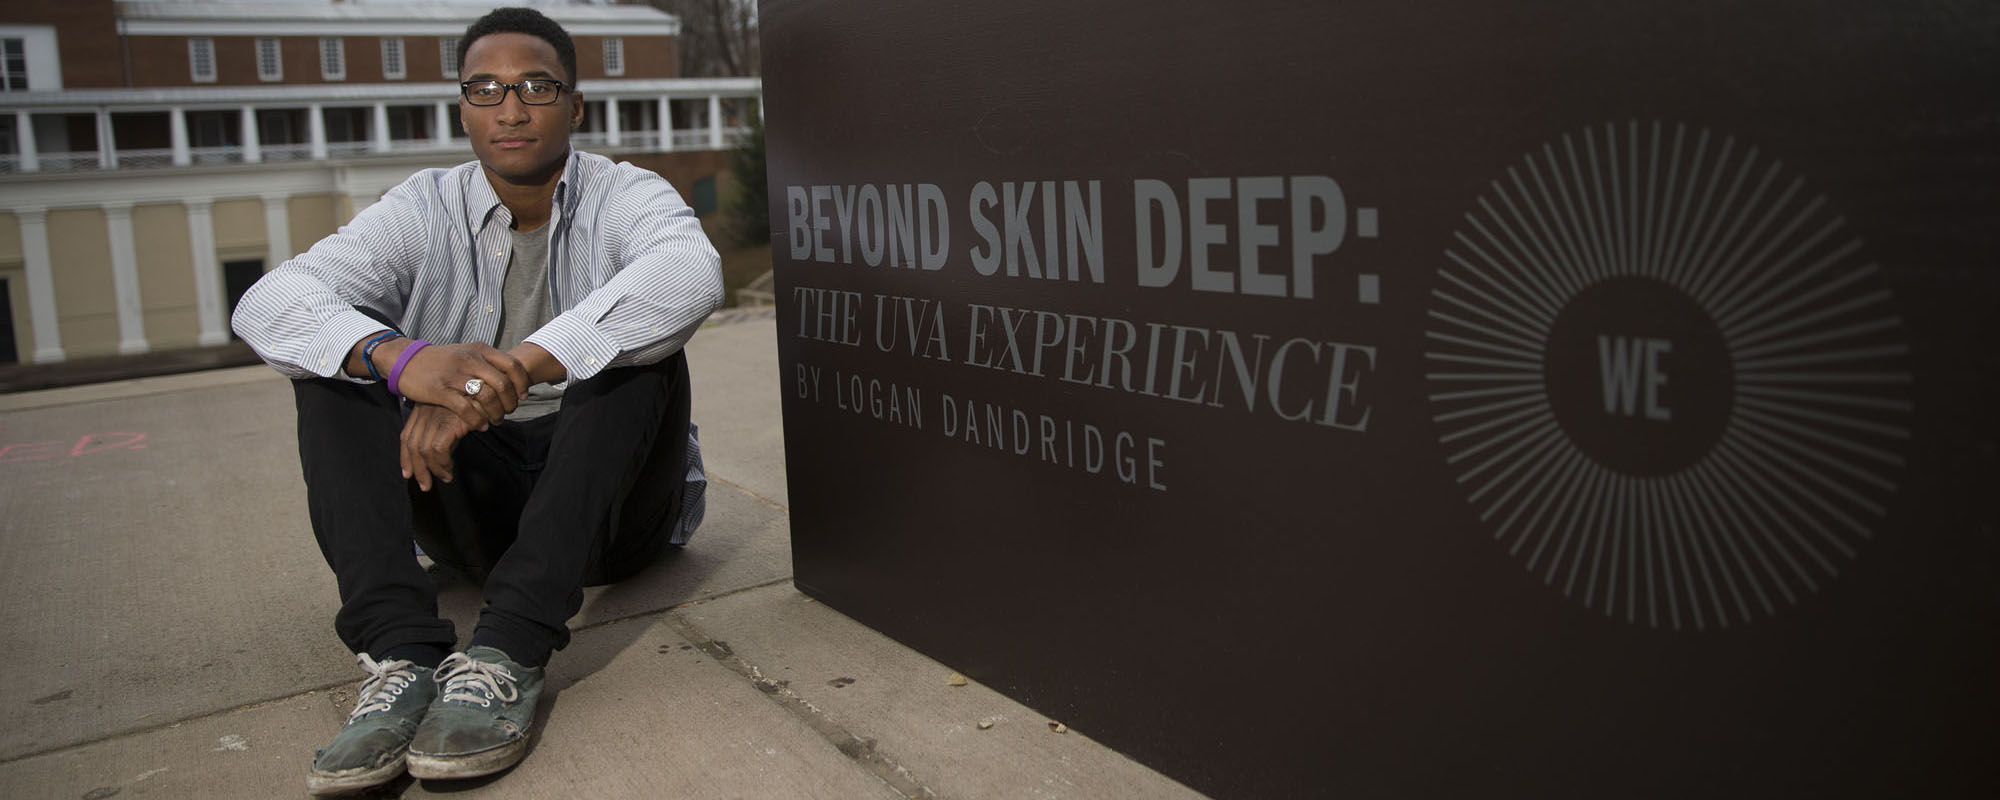 Logan Dandridge sits on the ground next to a sign that says Beyond Skin Deep:  The UVA Experience By Logan Dandridge